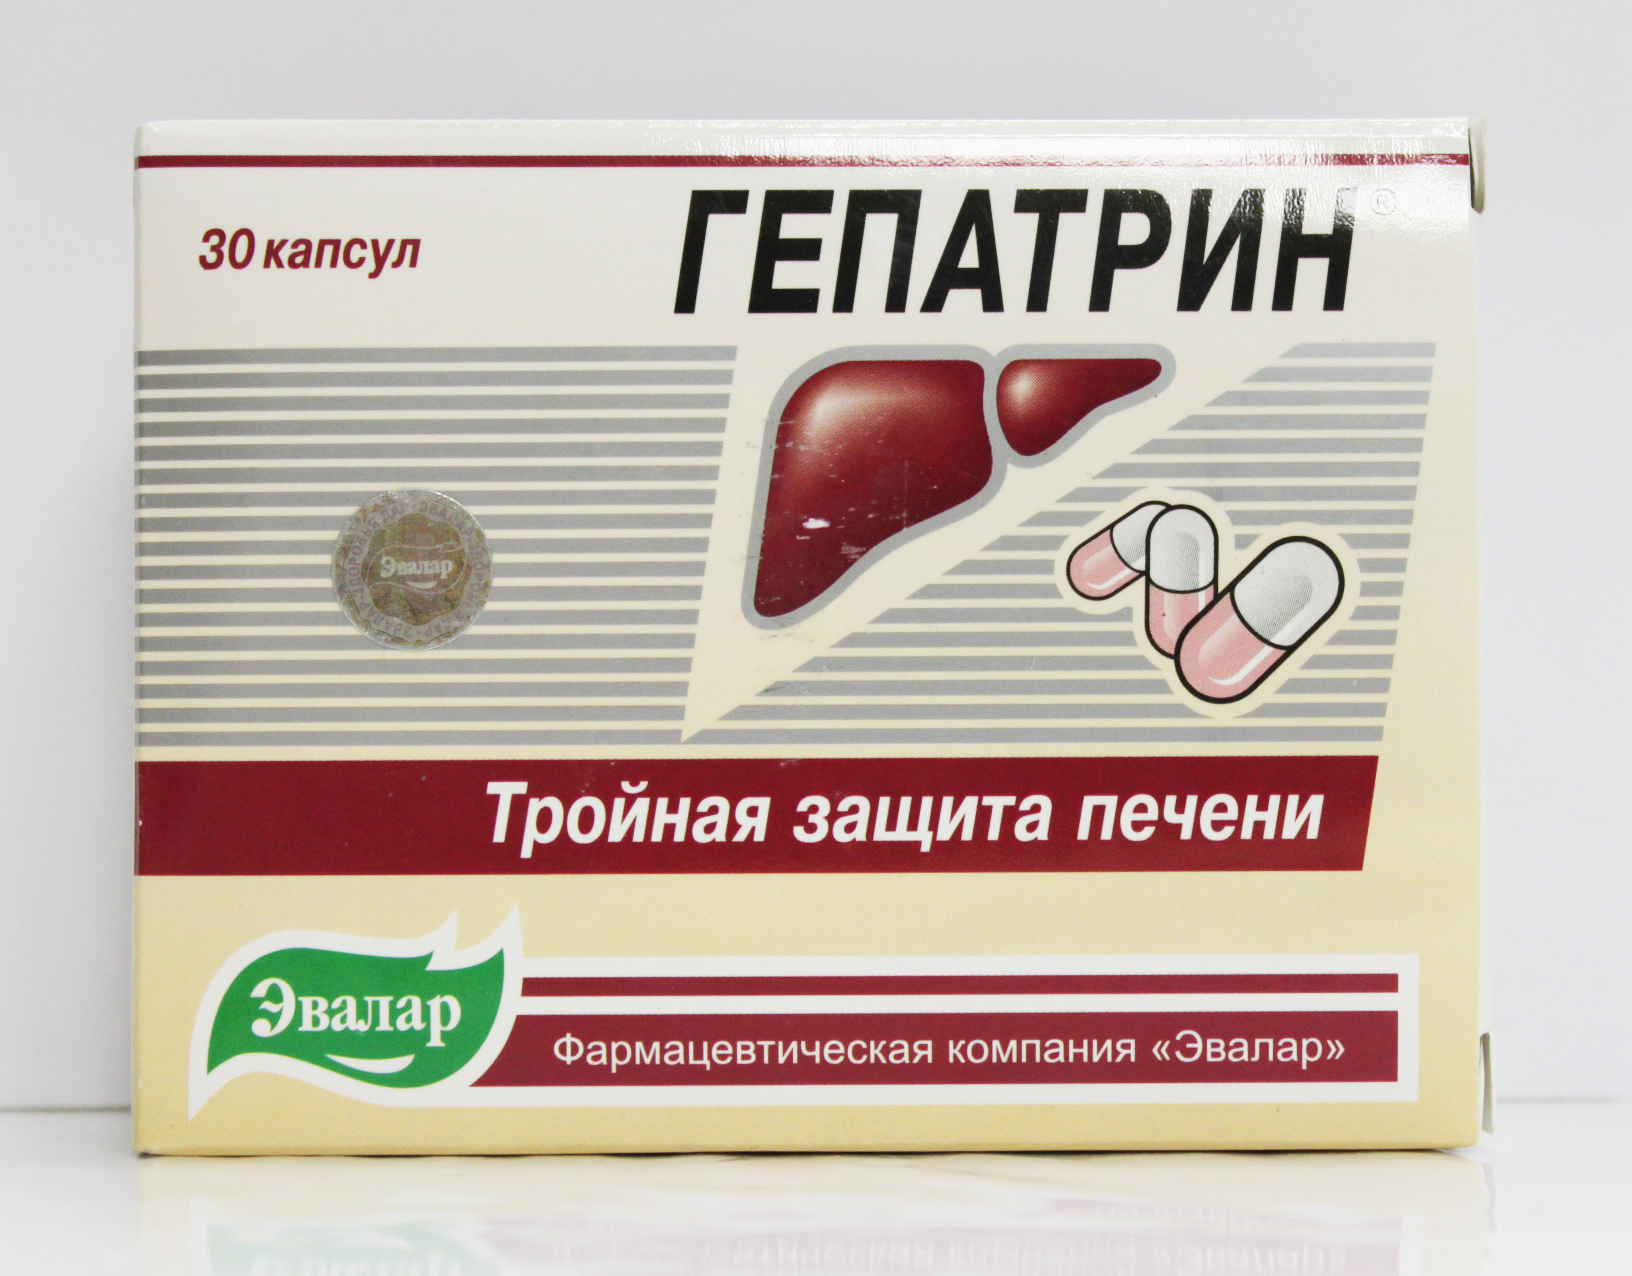 Гепатотрин. Гепатрин Эвалар 30 капсул. Гепатрин 4602242002185. Гепатрин 400 мг. Таблетки от печени Гепатрин.